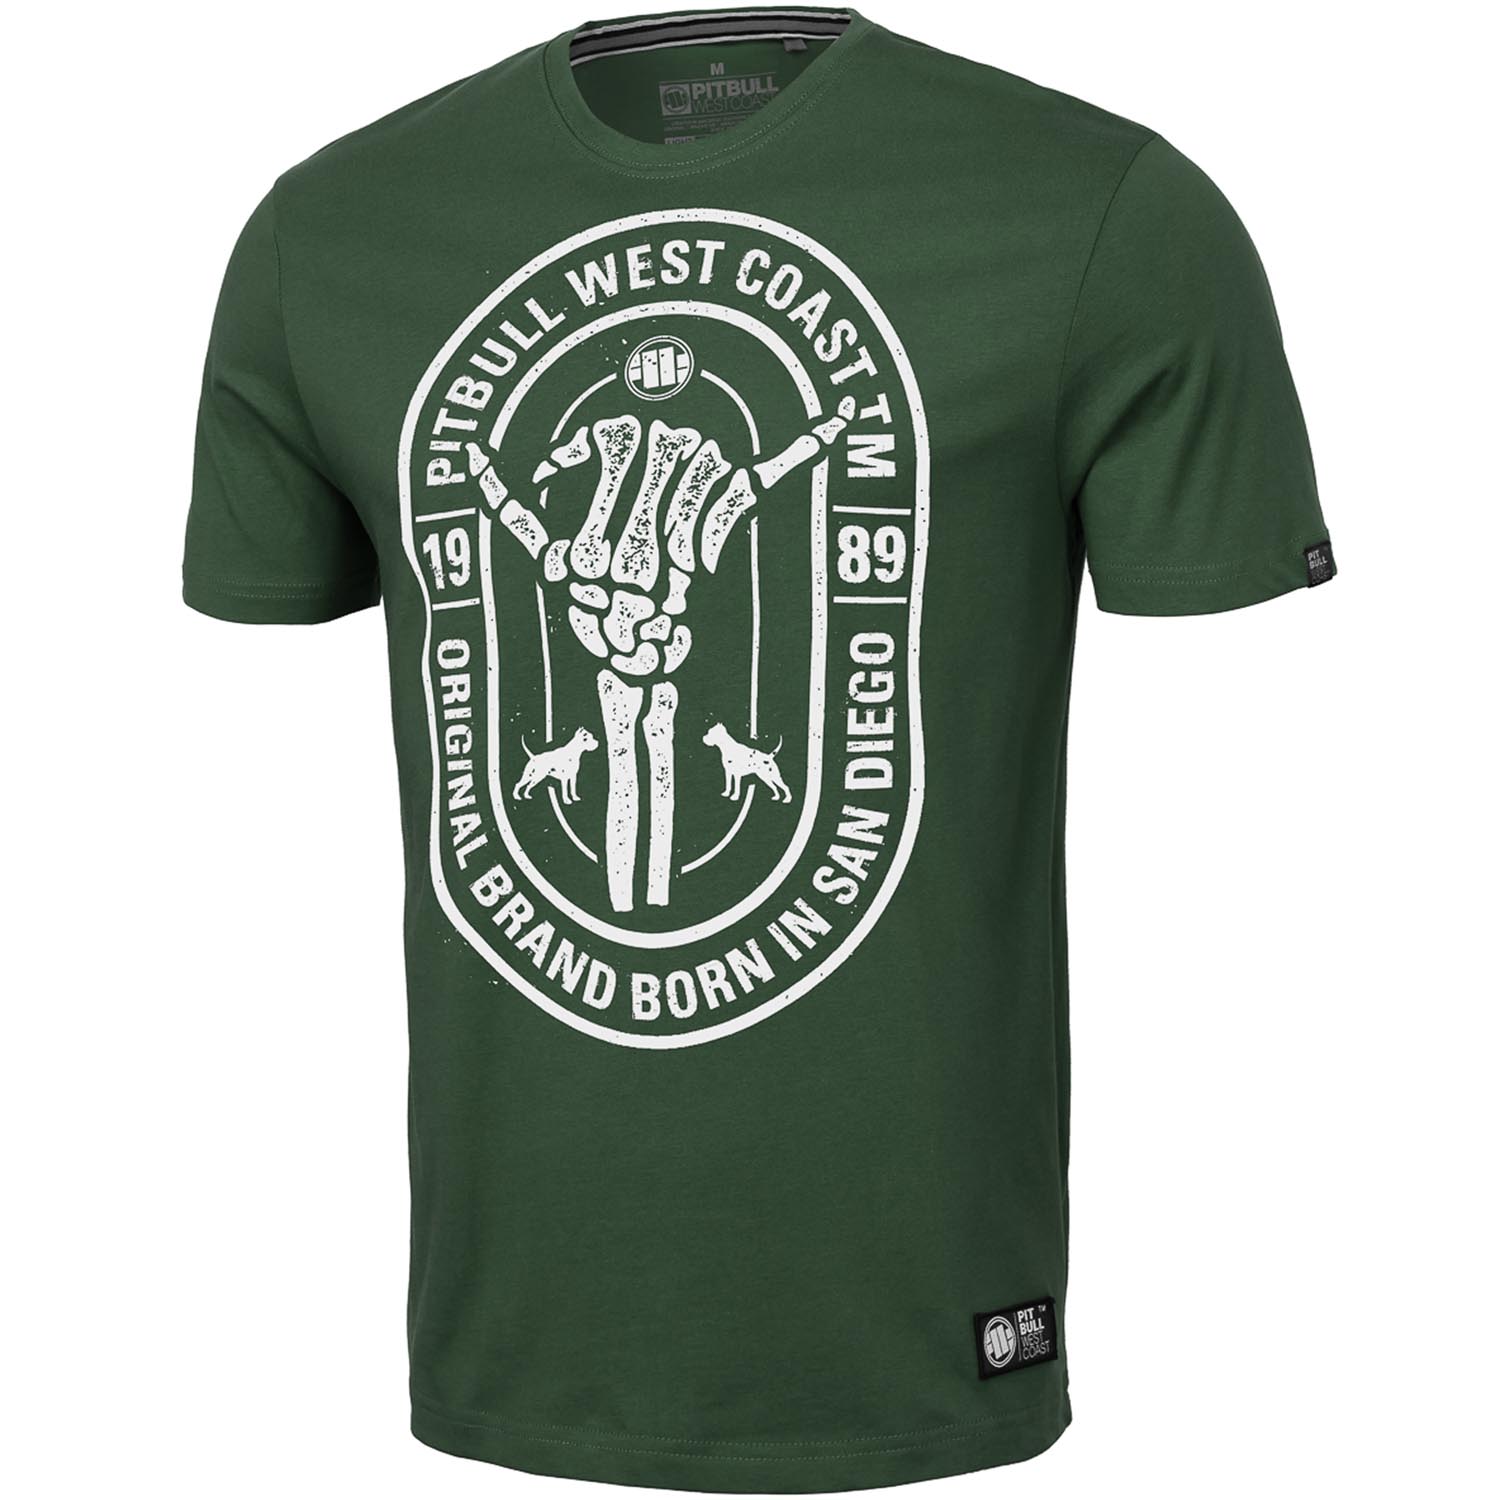 Pit Bull West Coast T-Shirt, Keep Rolling 22, green